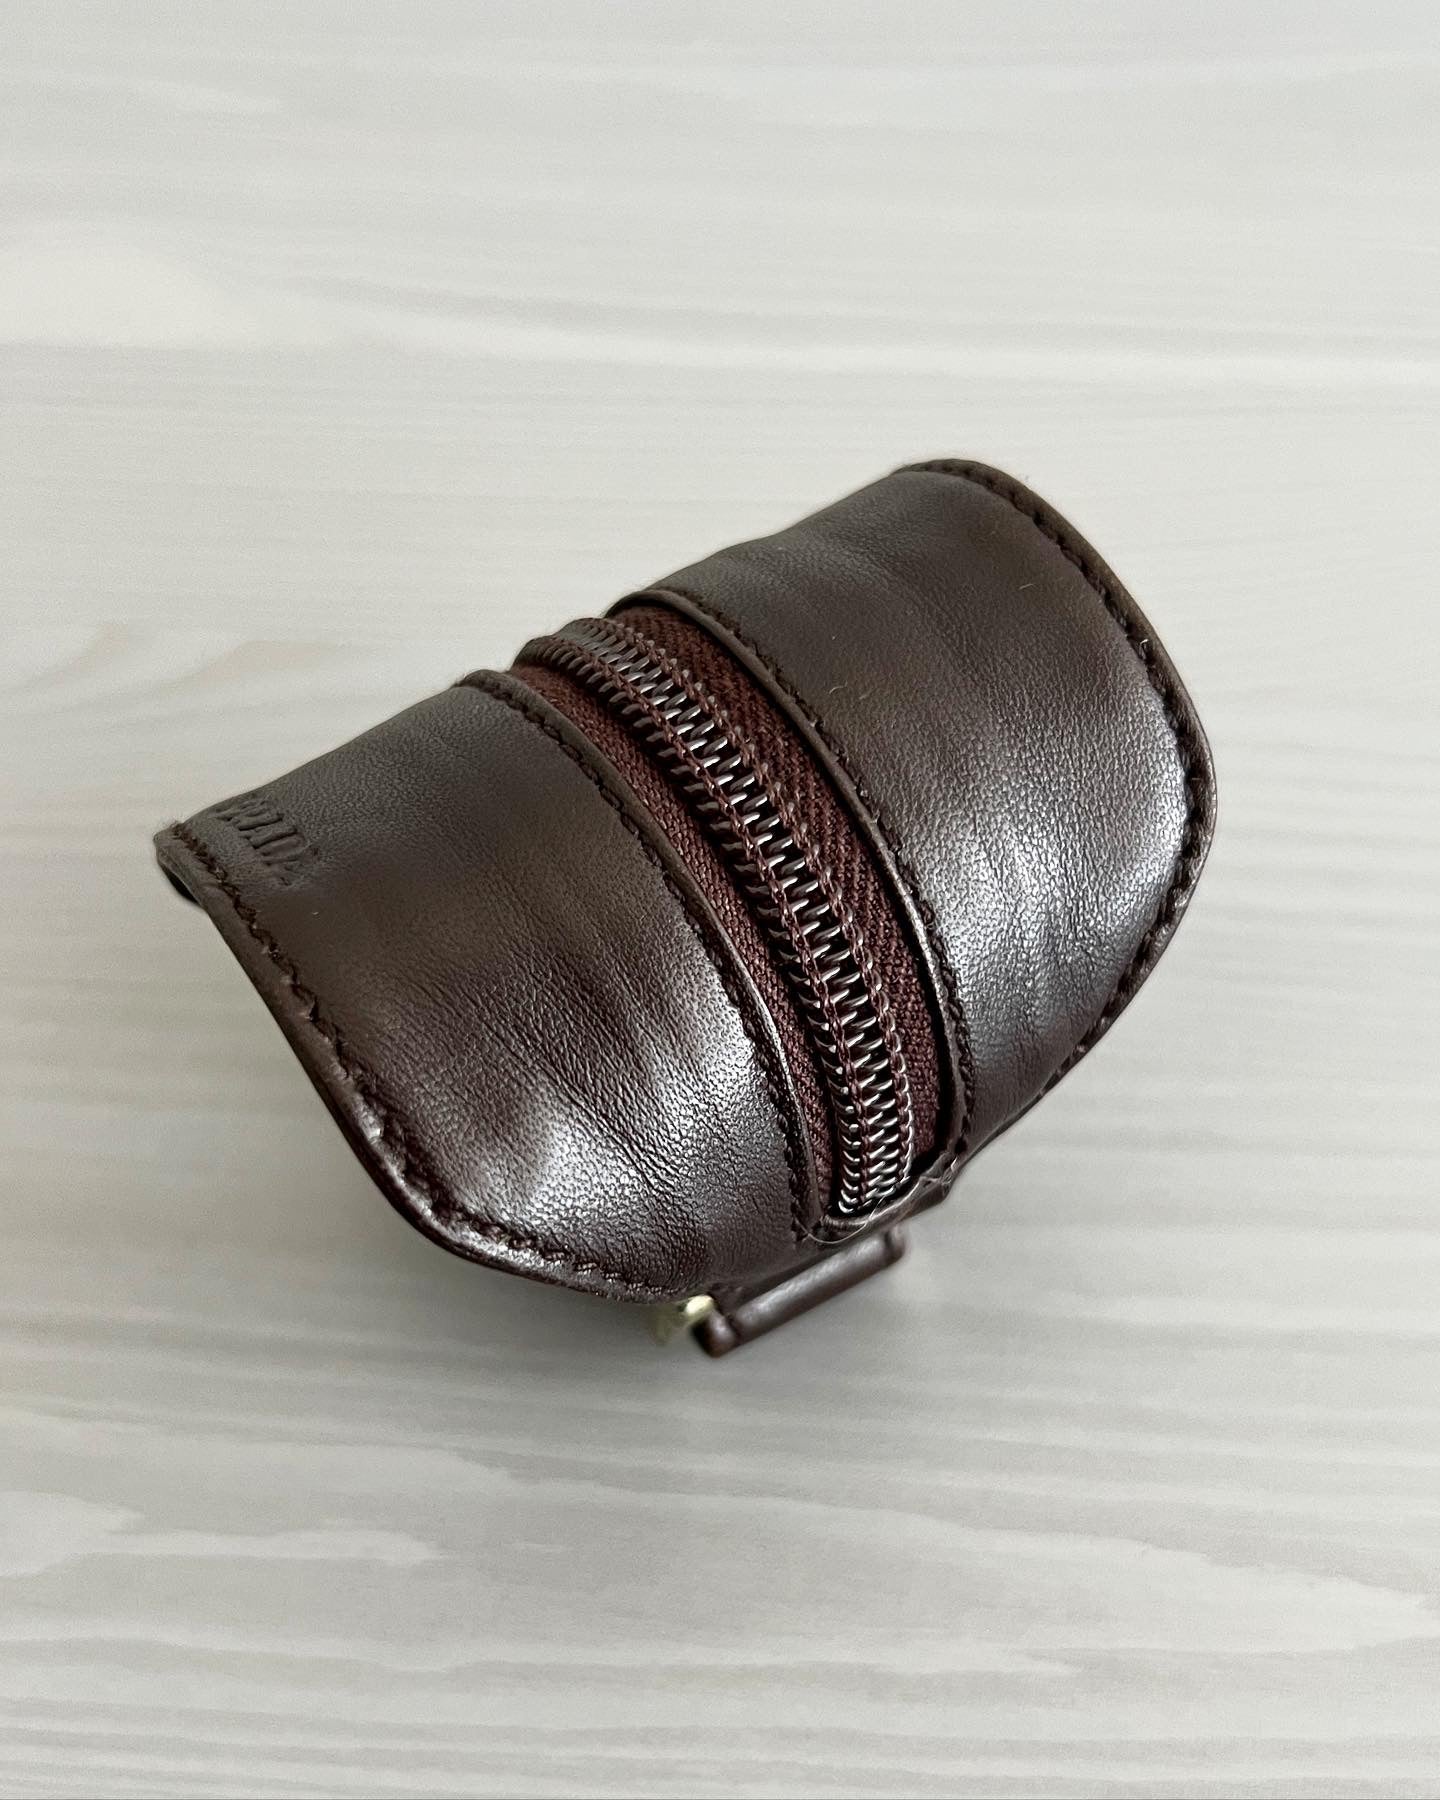 Prada Early 2000s Leather Wrist-Bag